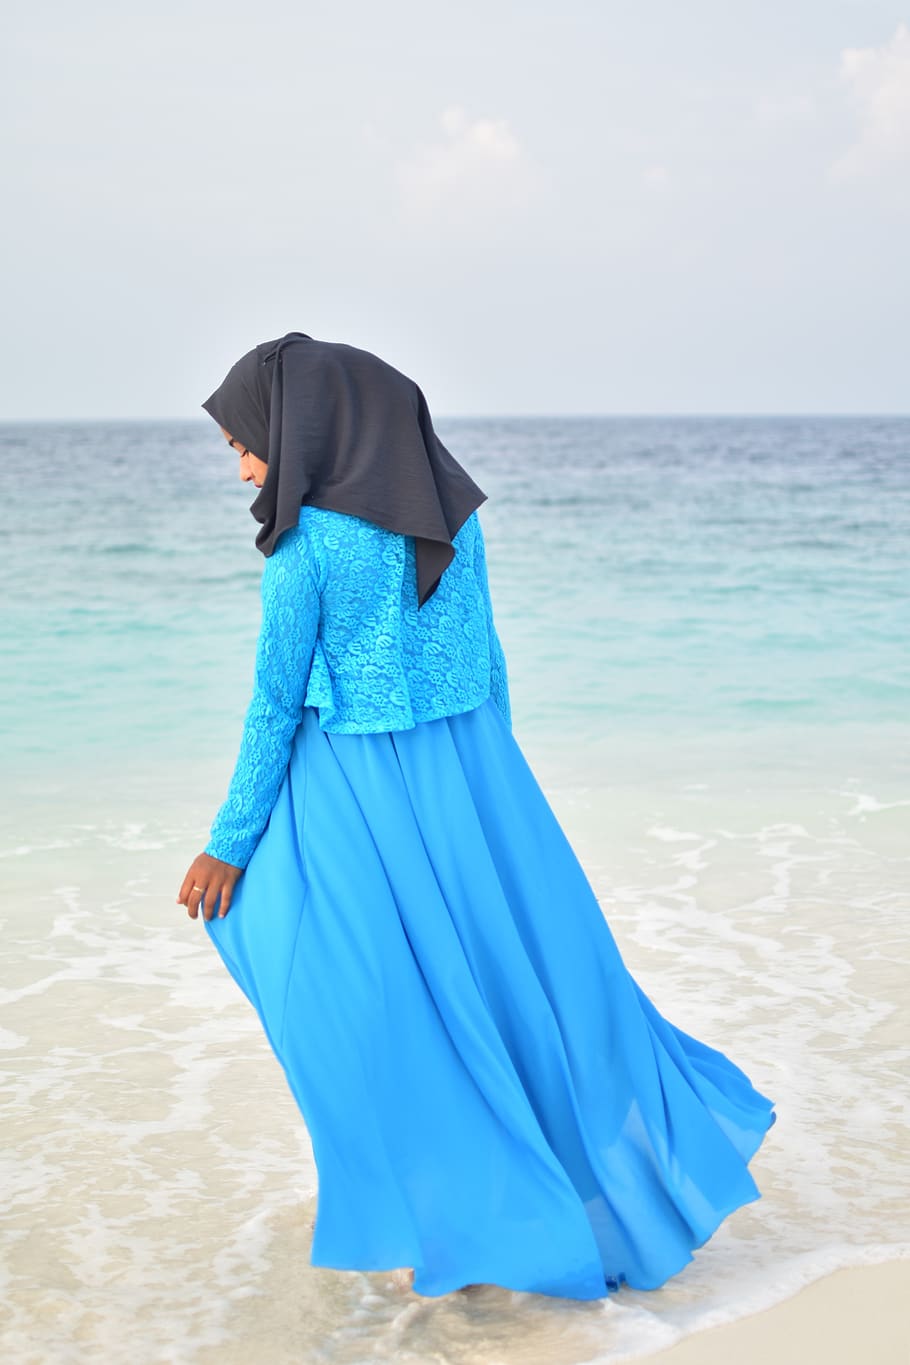 muslim, islam, blue, long dress, sea portrait, model, religion